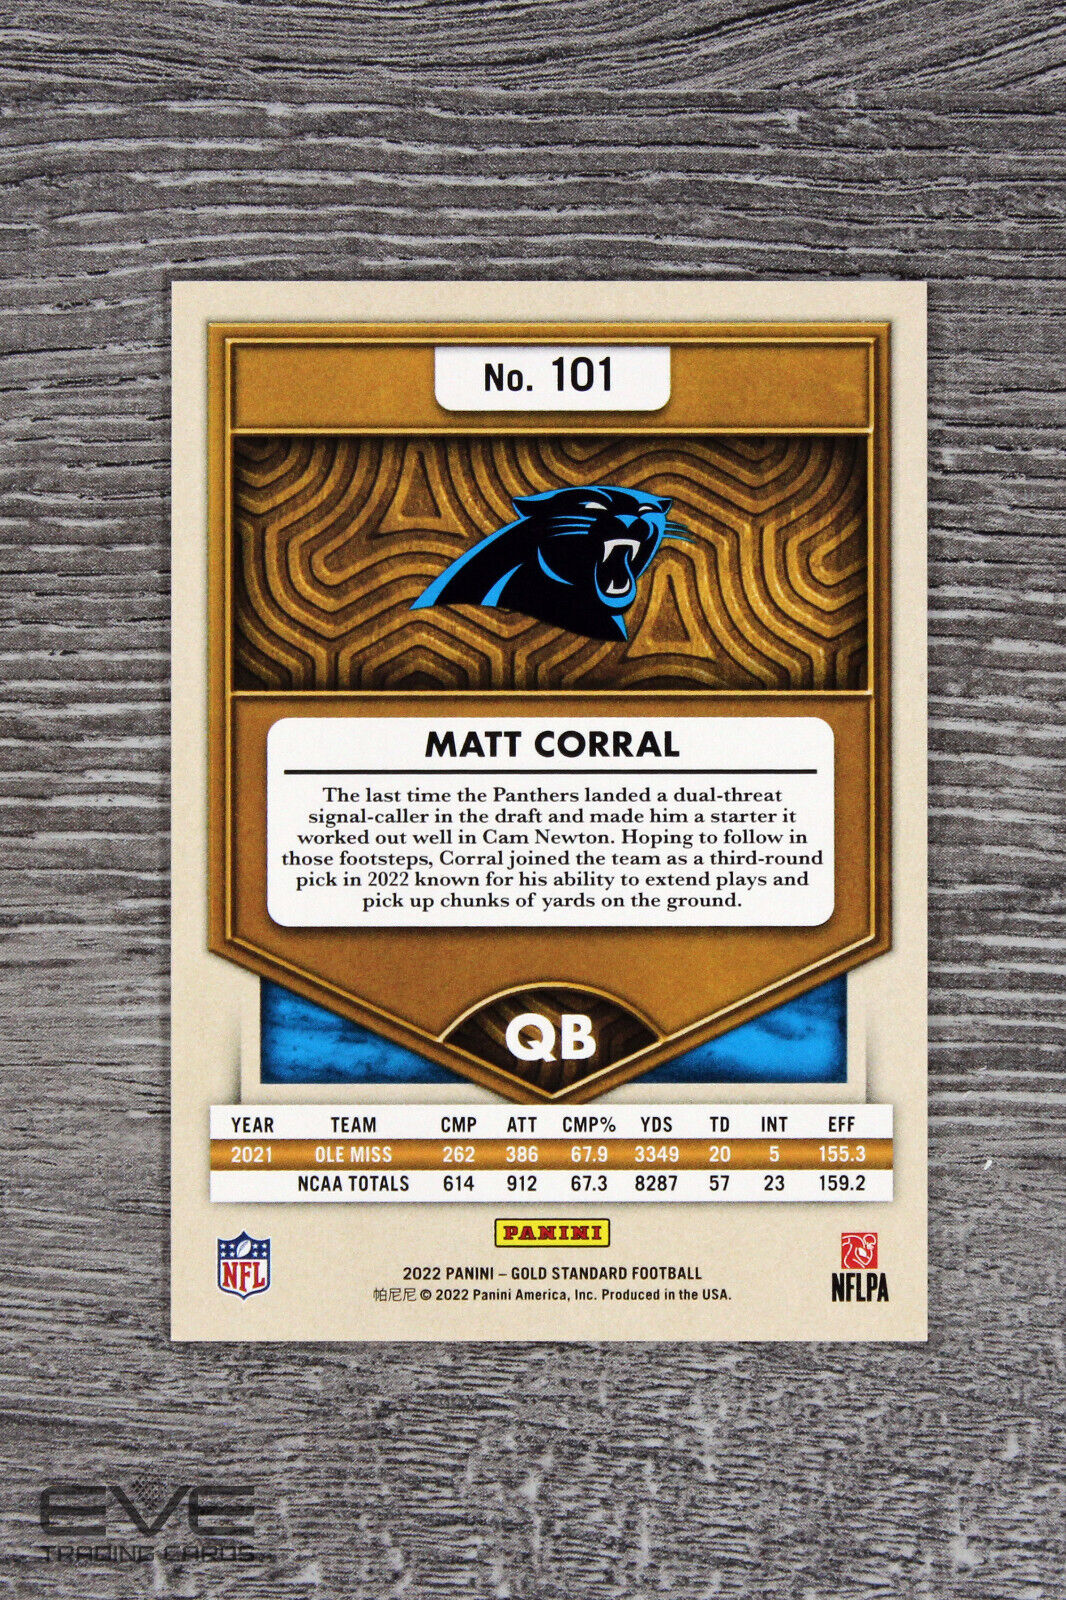 2022 Panini Gold Standard NFL Card #101 Matt Corral Panthers Rookie /30 - NM/M